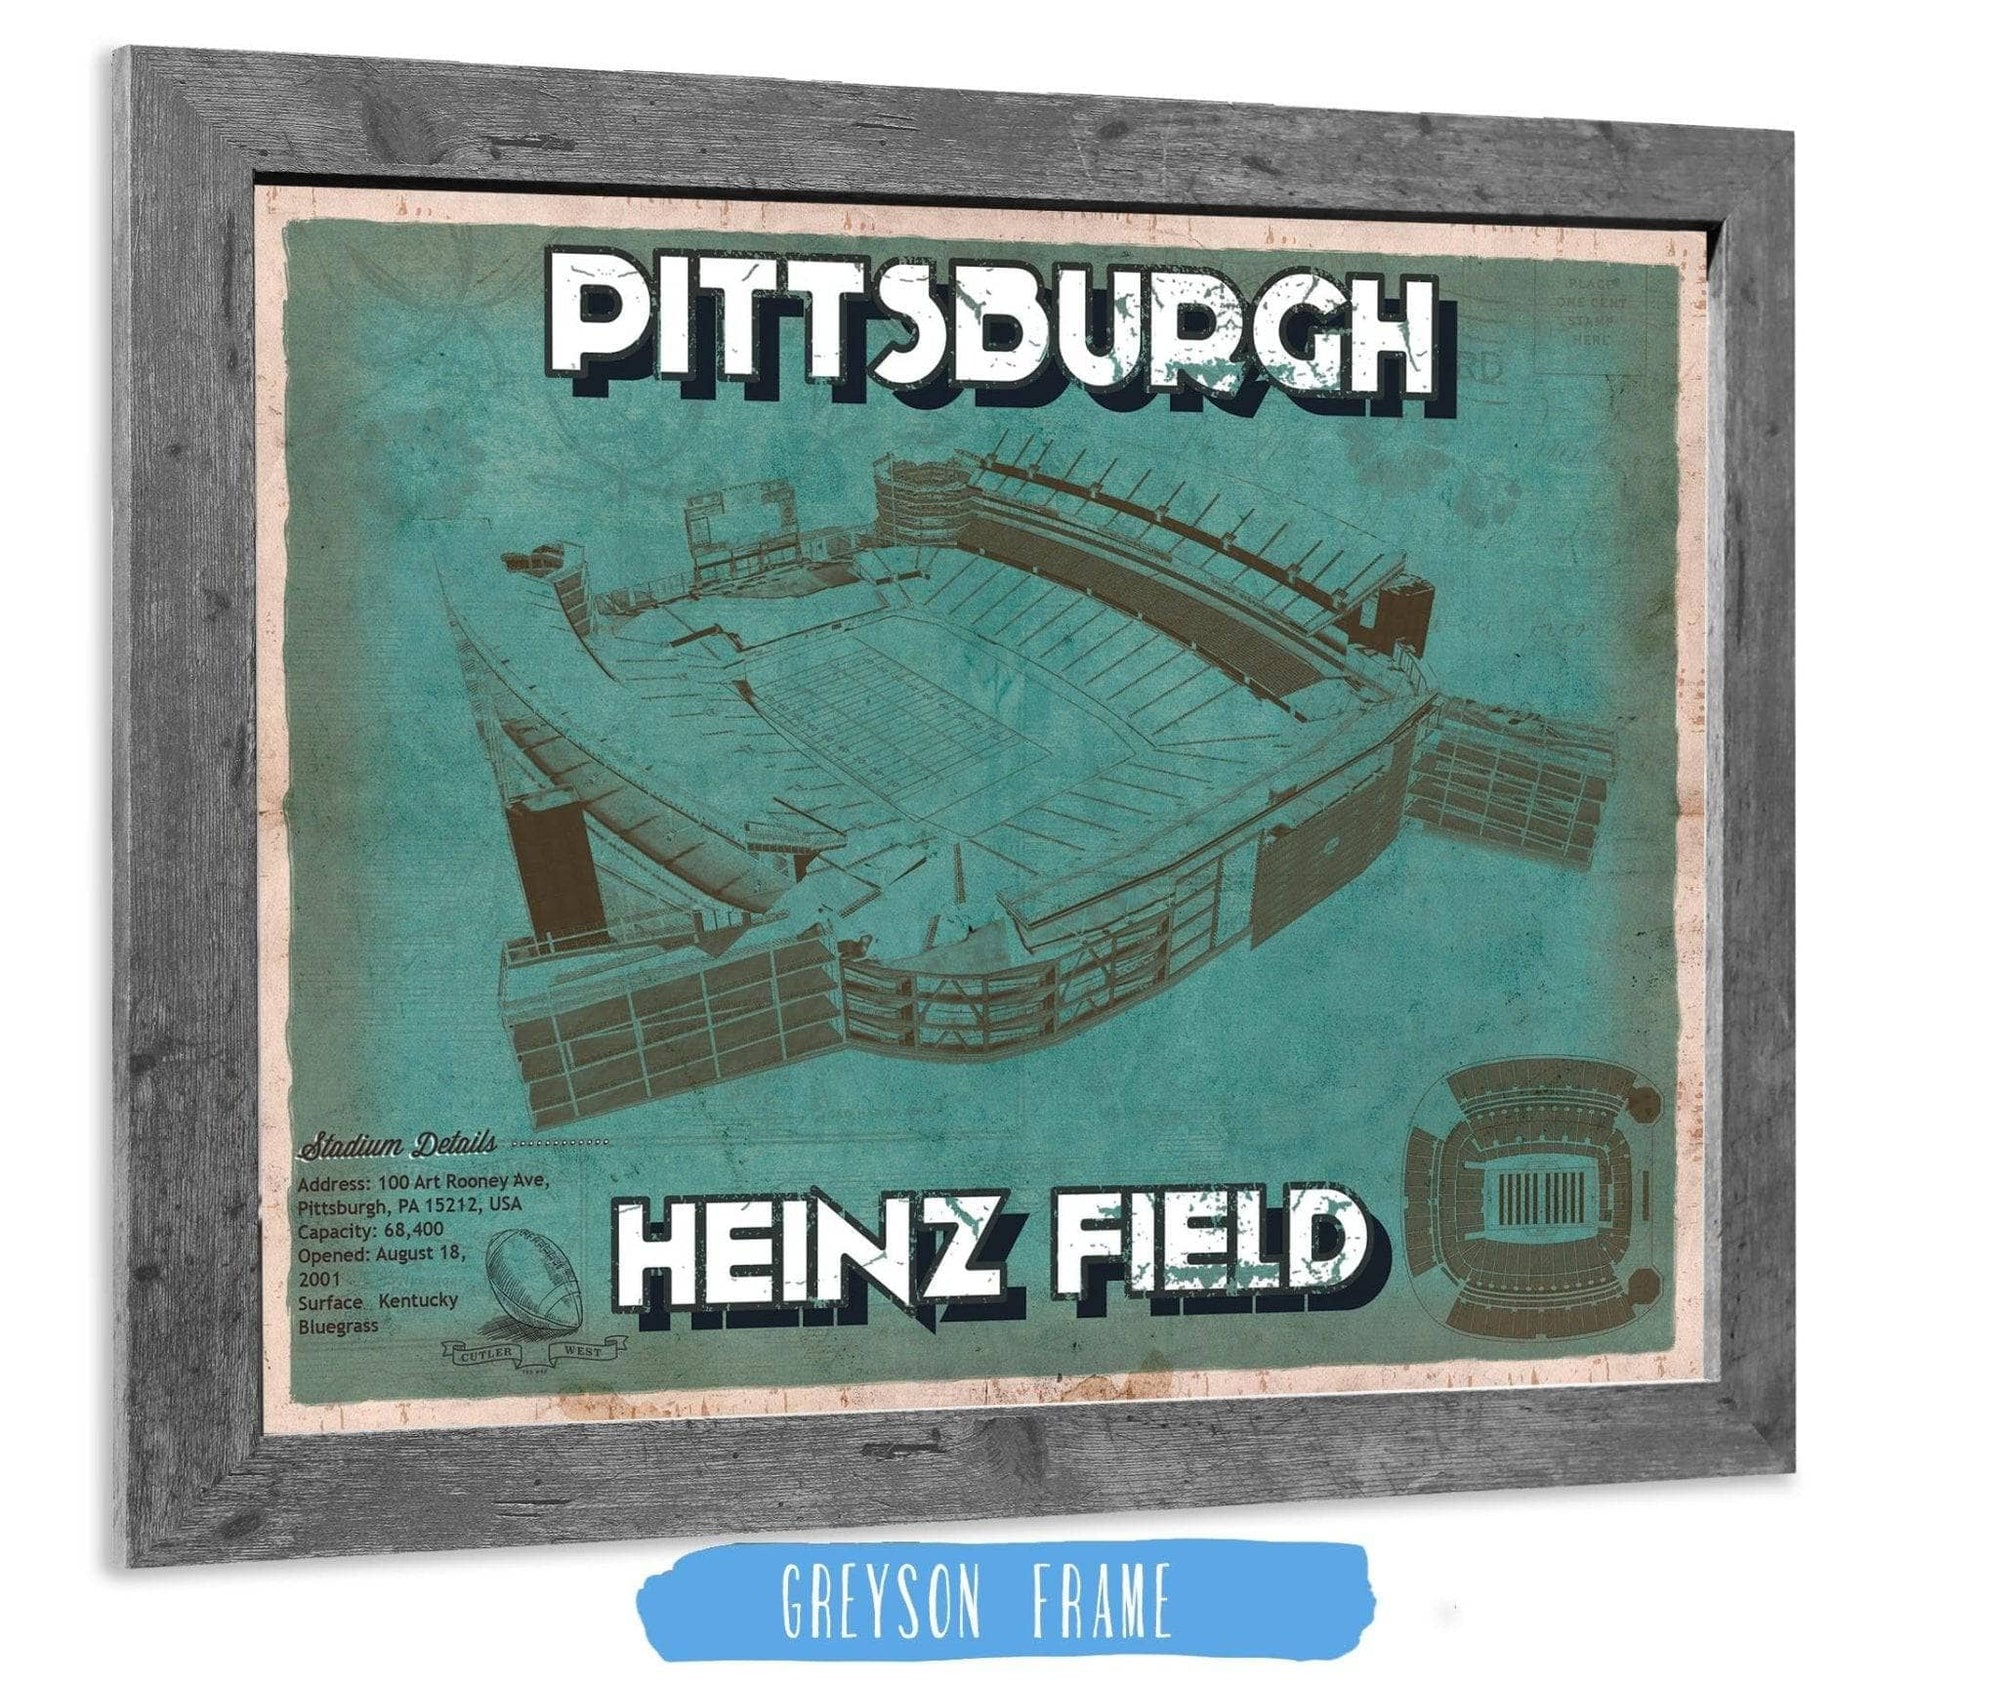 Cutler West Pro Football Collection 14" x 11" / Greyson Frame Pittsburgh Steelers Stadium Art Team Color- Heinz Field - Vintage Football Print 235353075